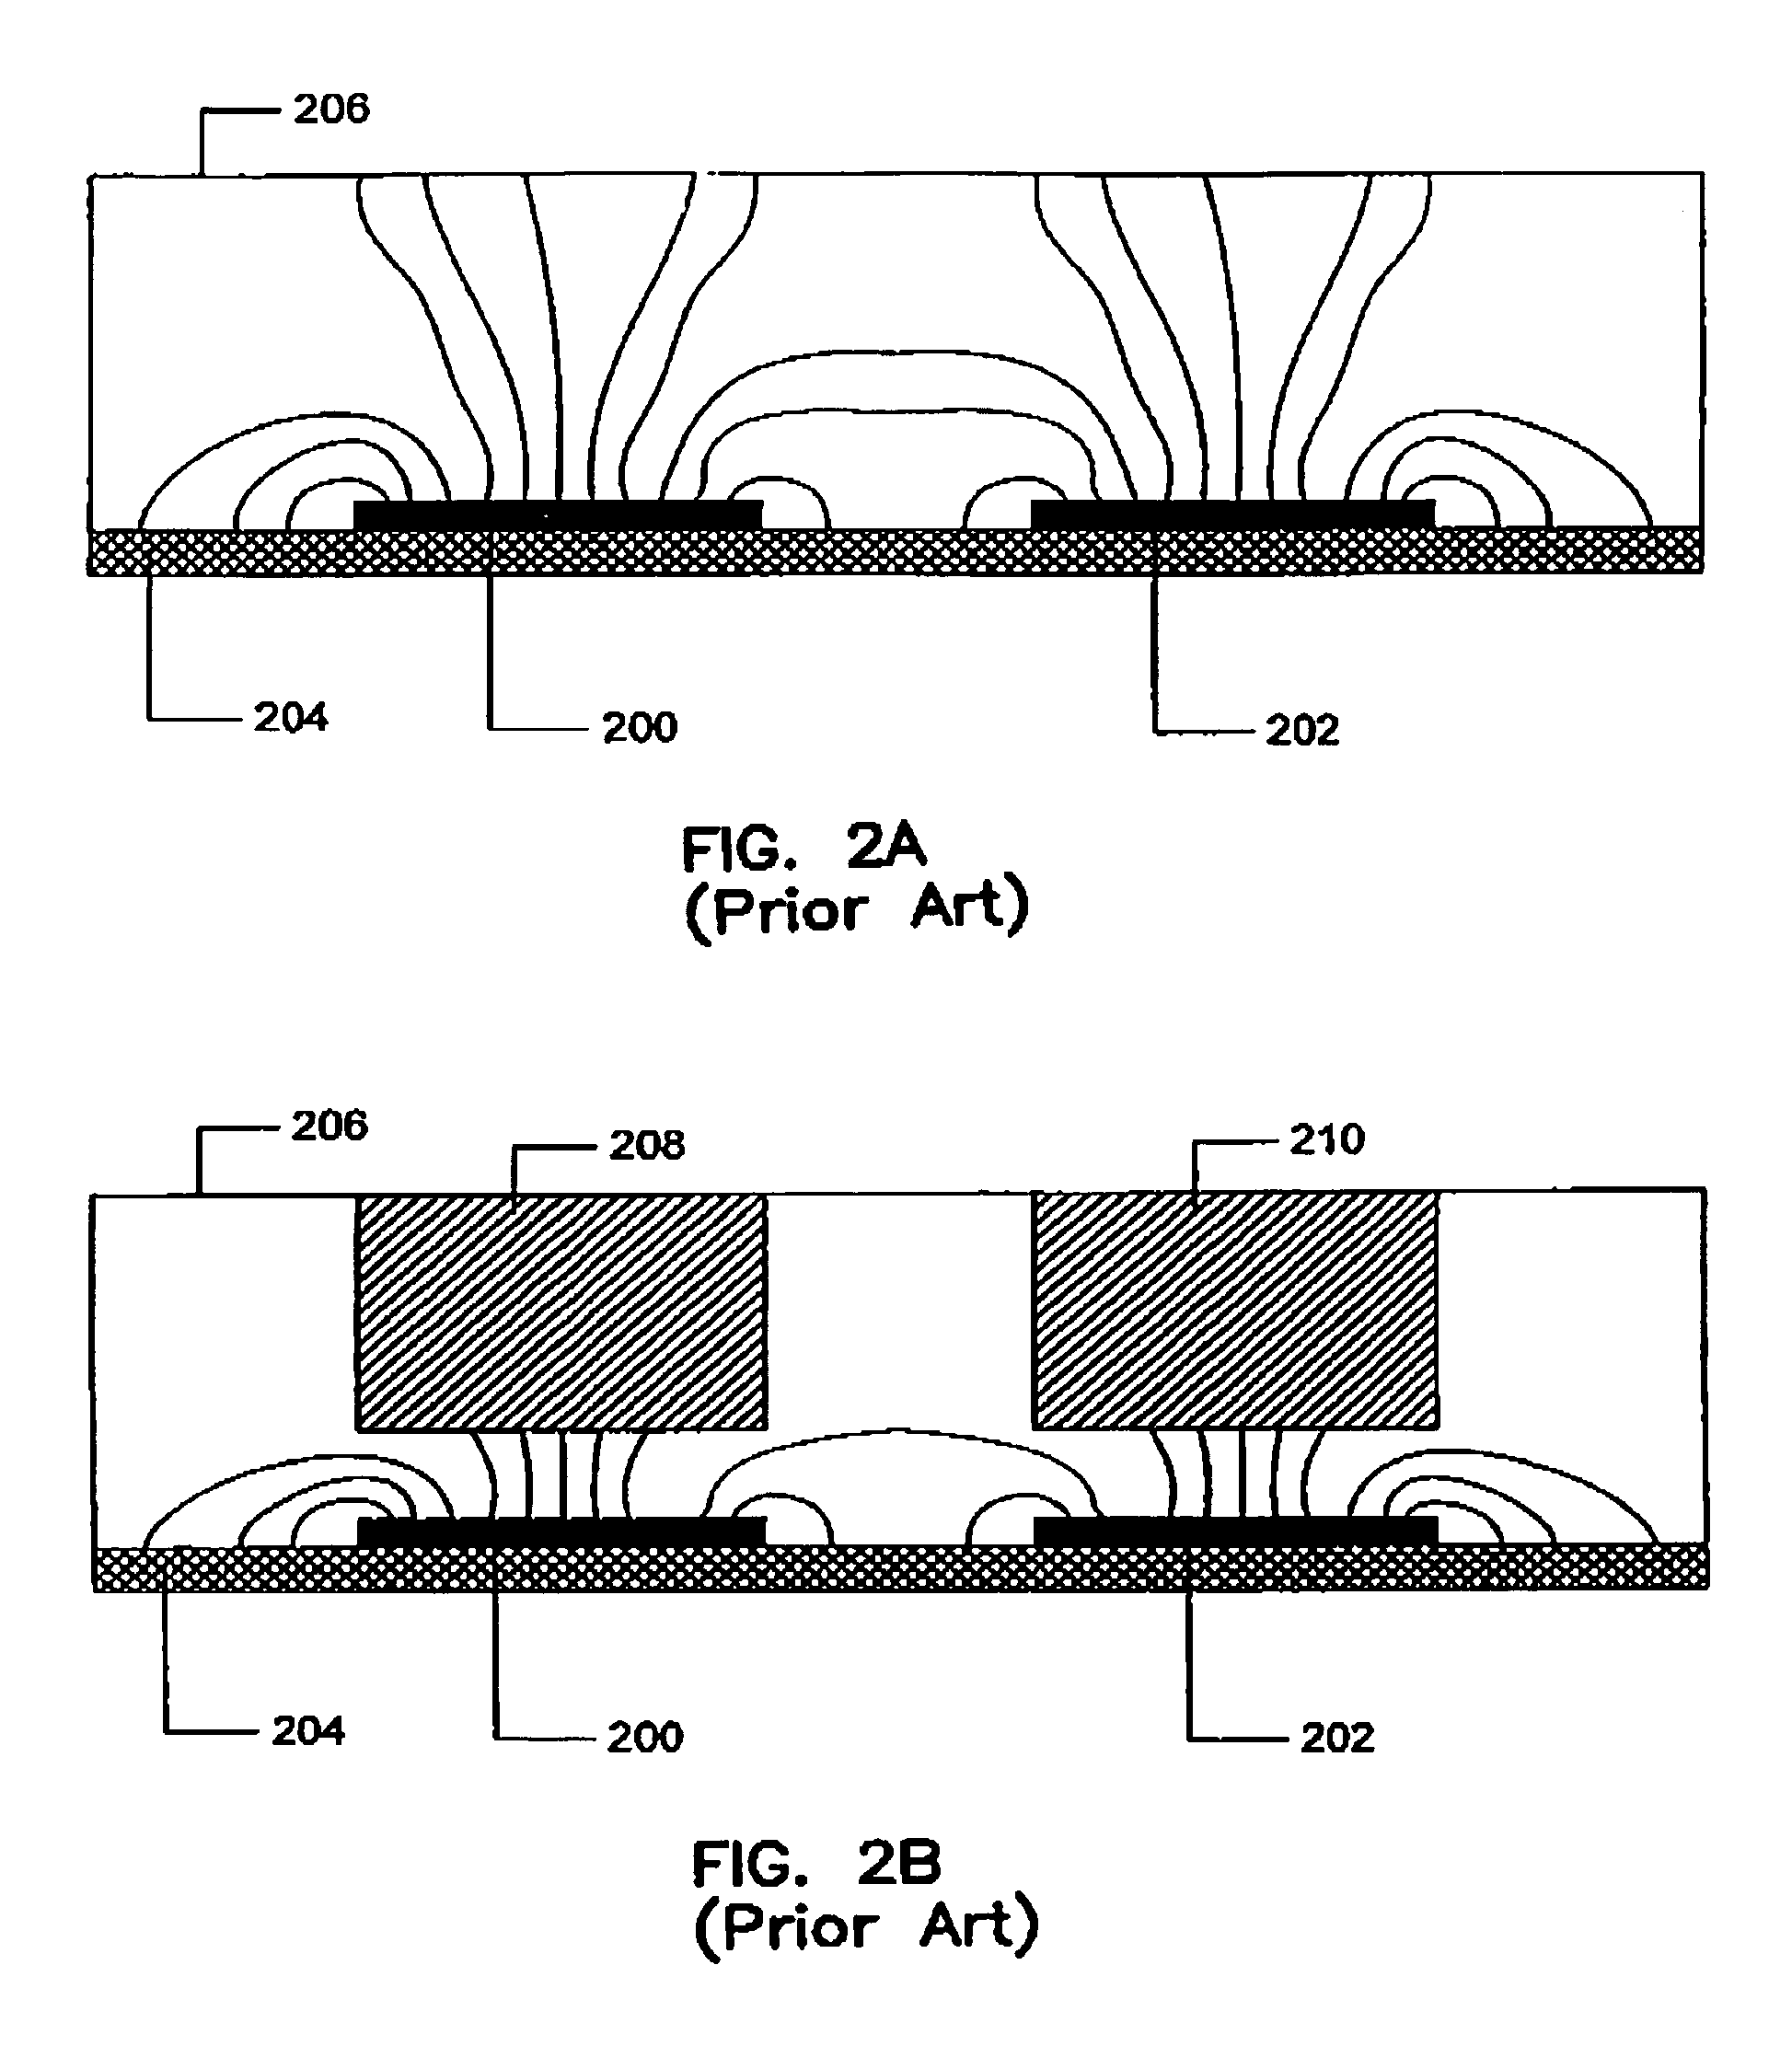 Superconductive stripline filter utilizing one or more inter-resonator coupling members